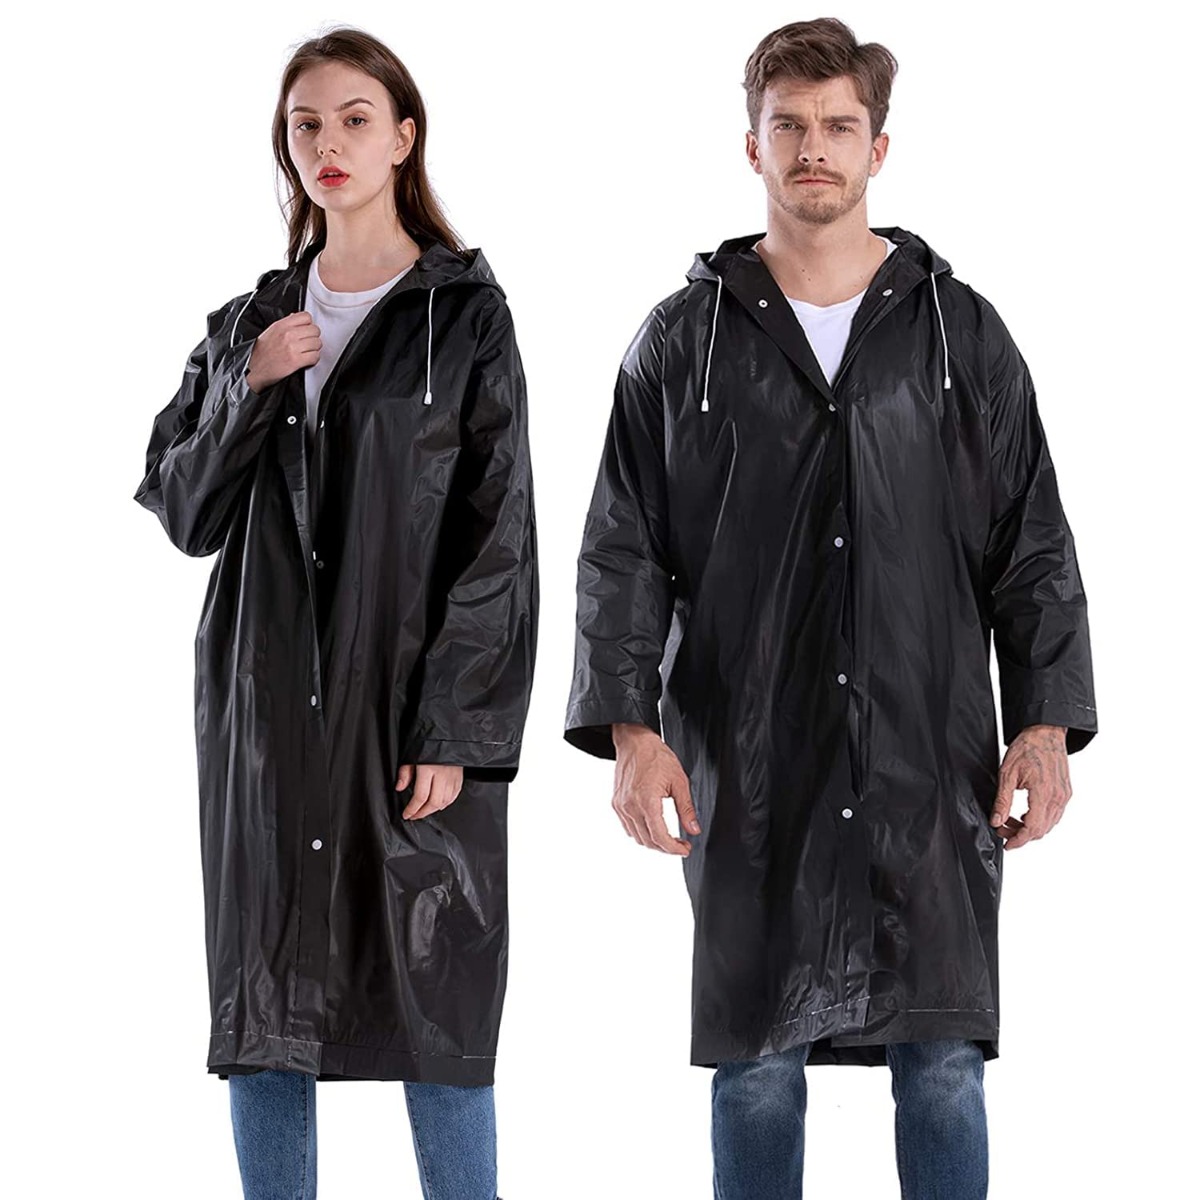 Real Rainwear - Fashionable Rainwear for All